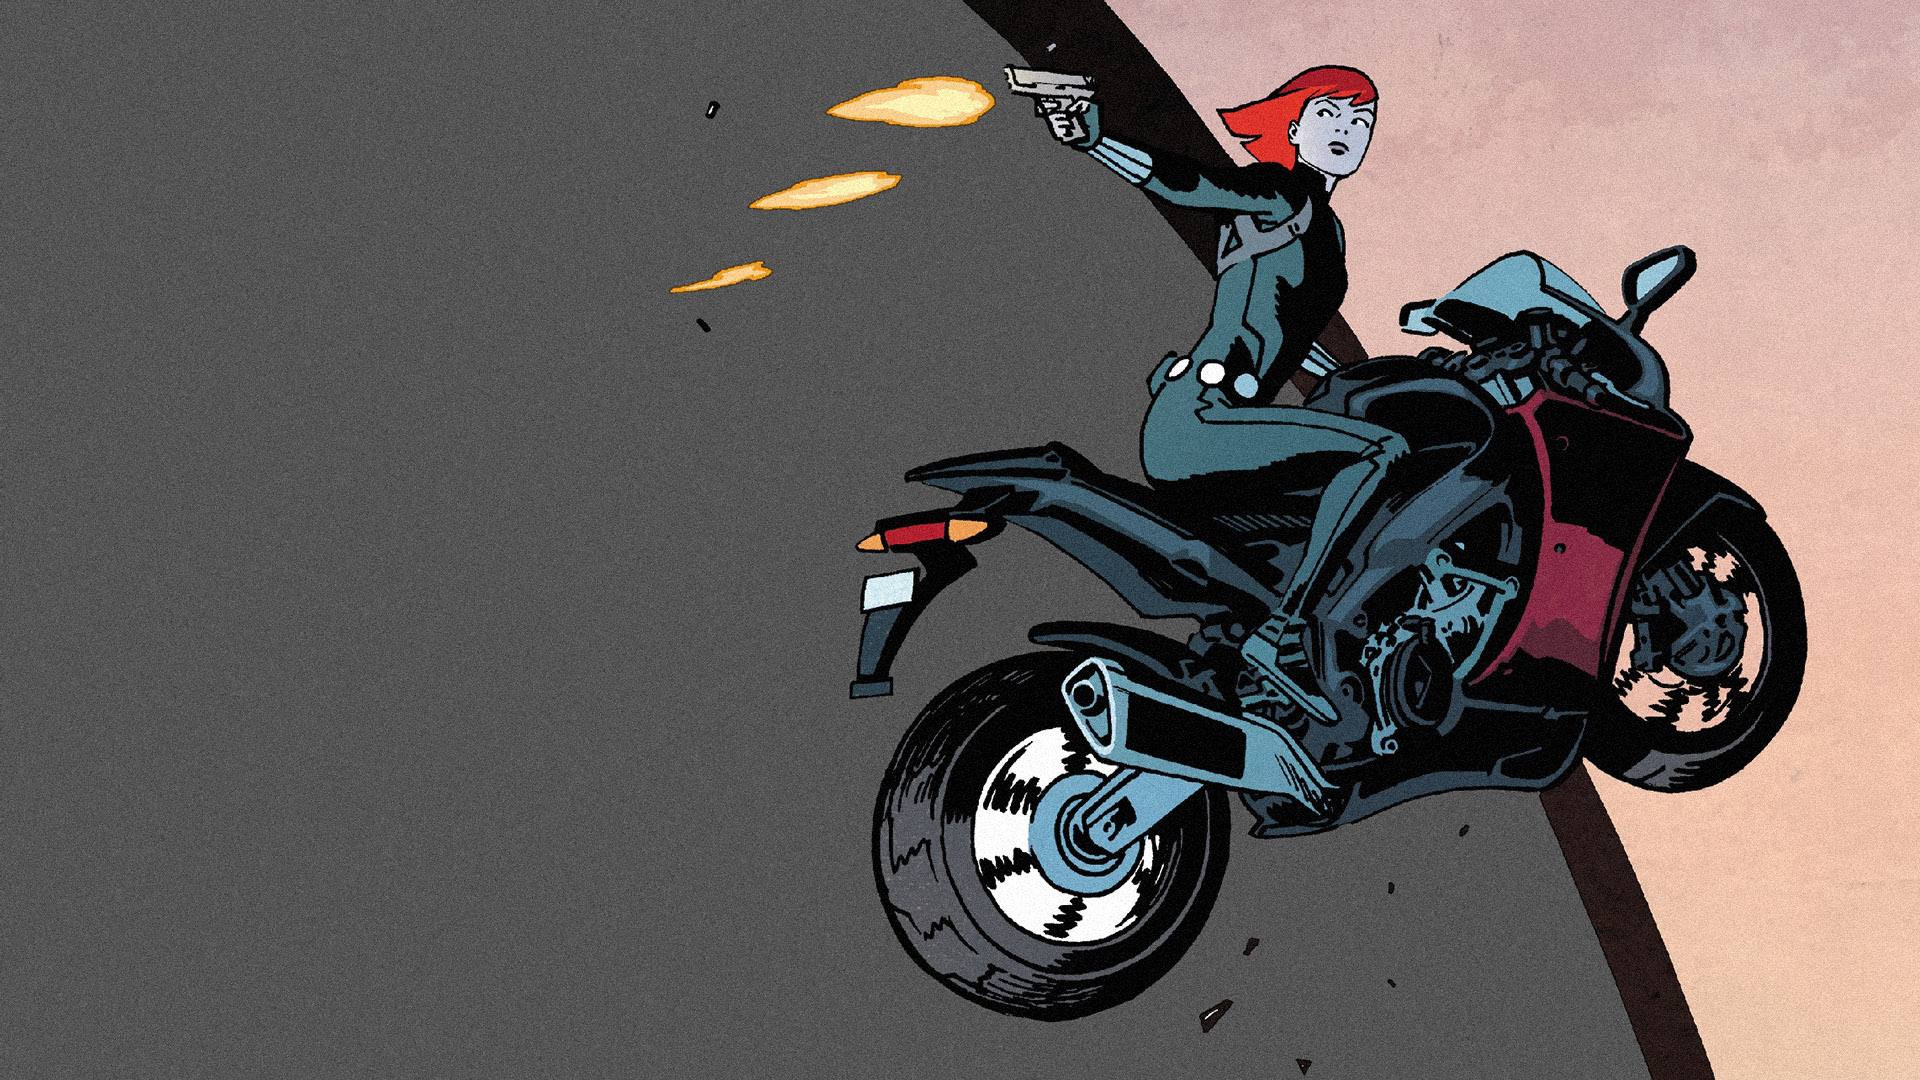 General 1920x1080 Black Widow Marvel Comics comics Marvel Girl motorcycle gun weapon girls with guns vehicle redhead women with motorcycles comic art